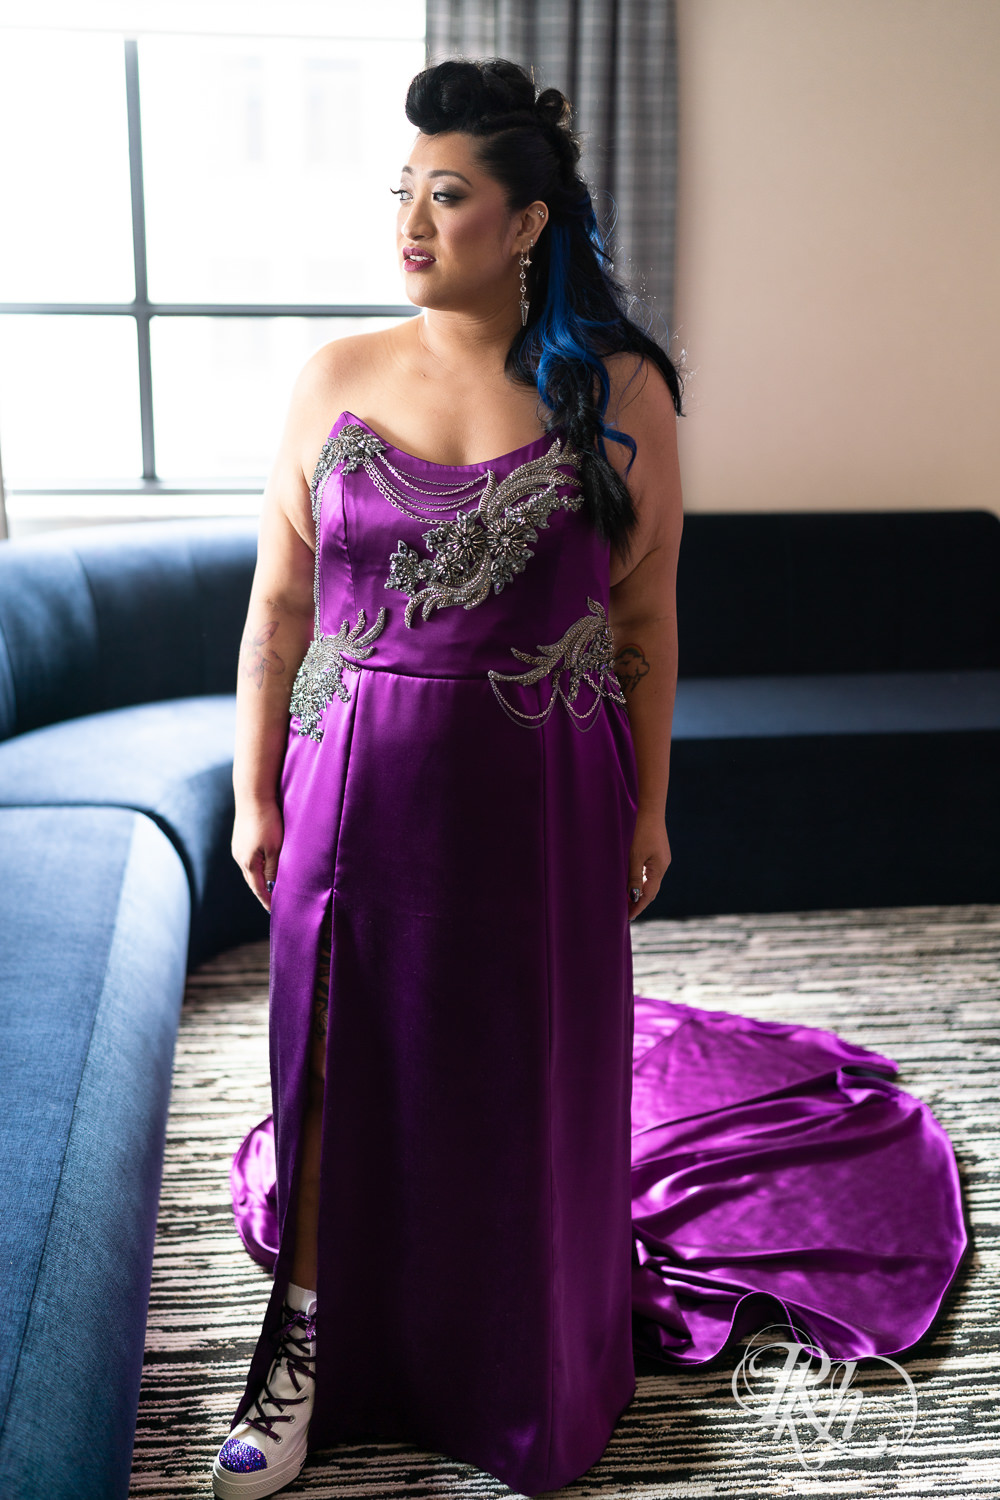 Filipino bride with mowhawk dressed in purple wedding dress on wedding day.